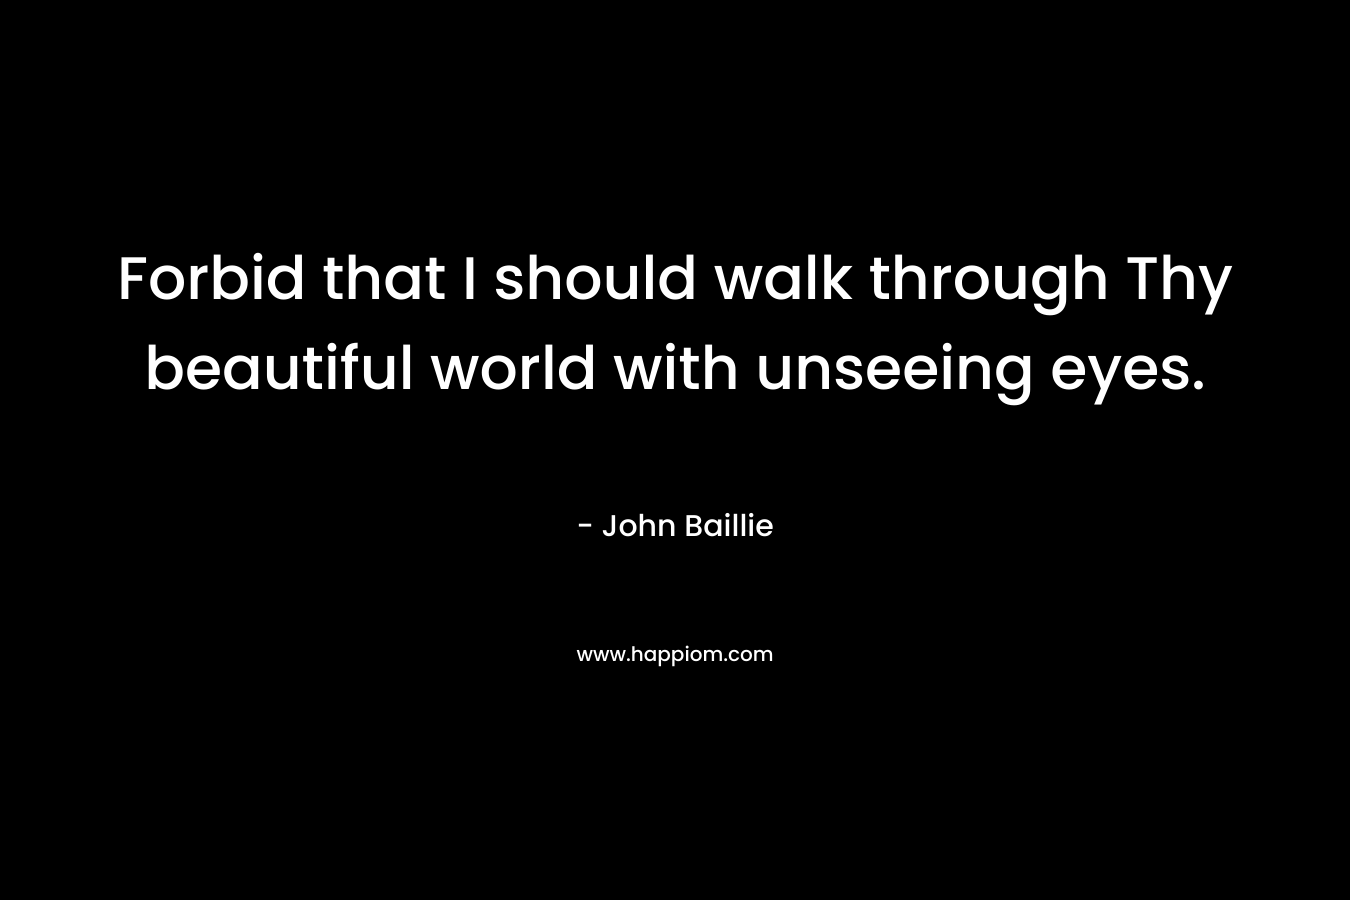 Forbid that I should walk through Thy beautiful world with unseeing eyes.